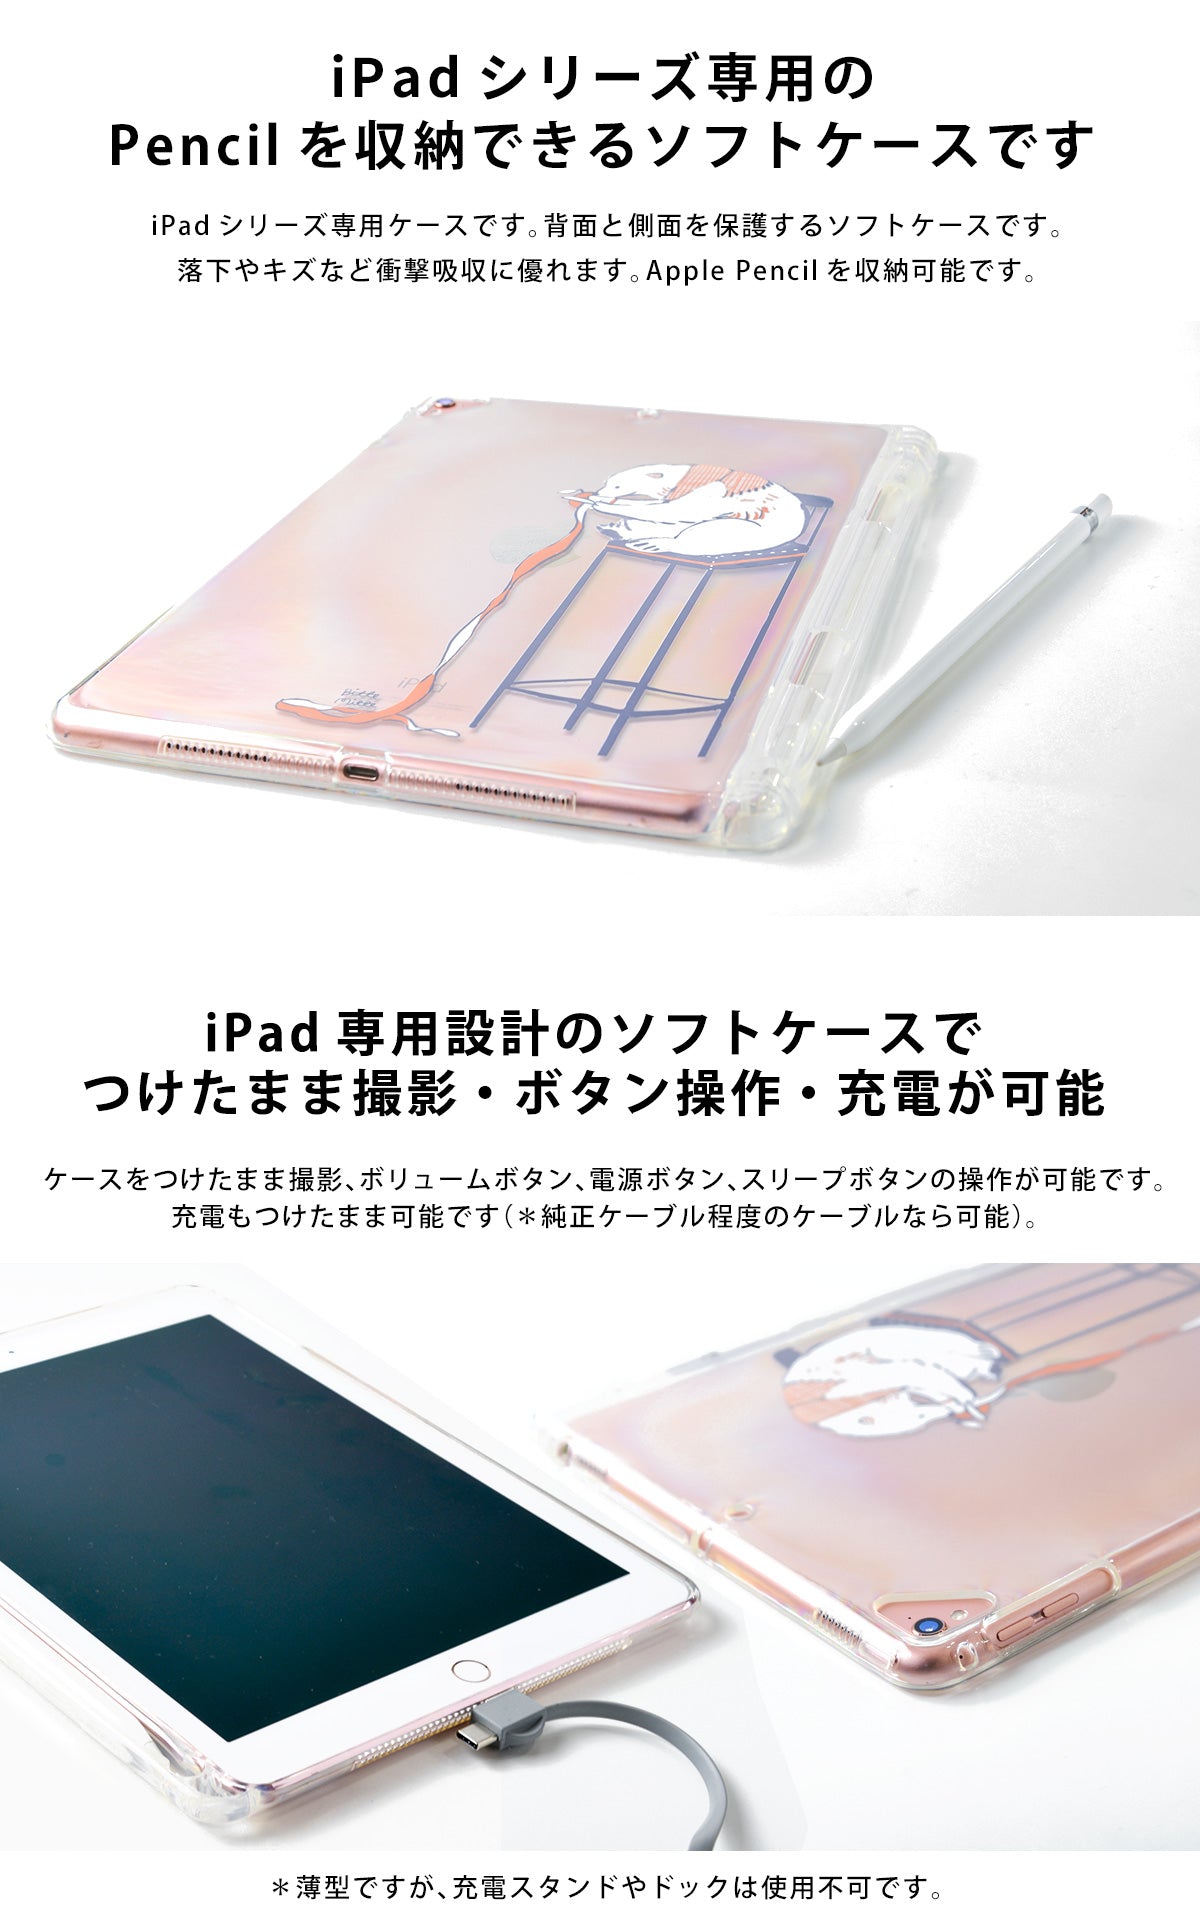 iPad 10.2in 保護 iPadカバー ケース 三つ折り ピンクゴールド